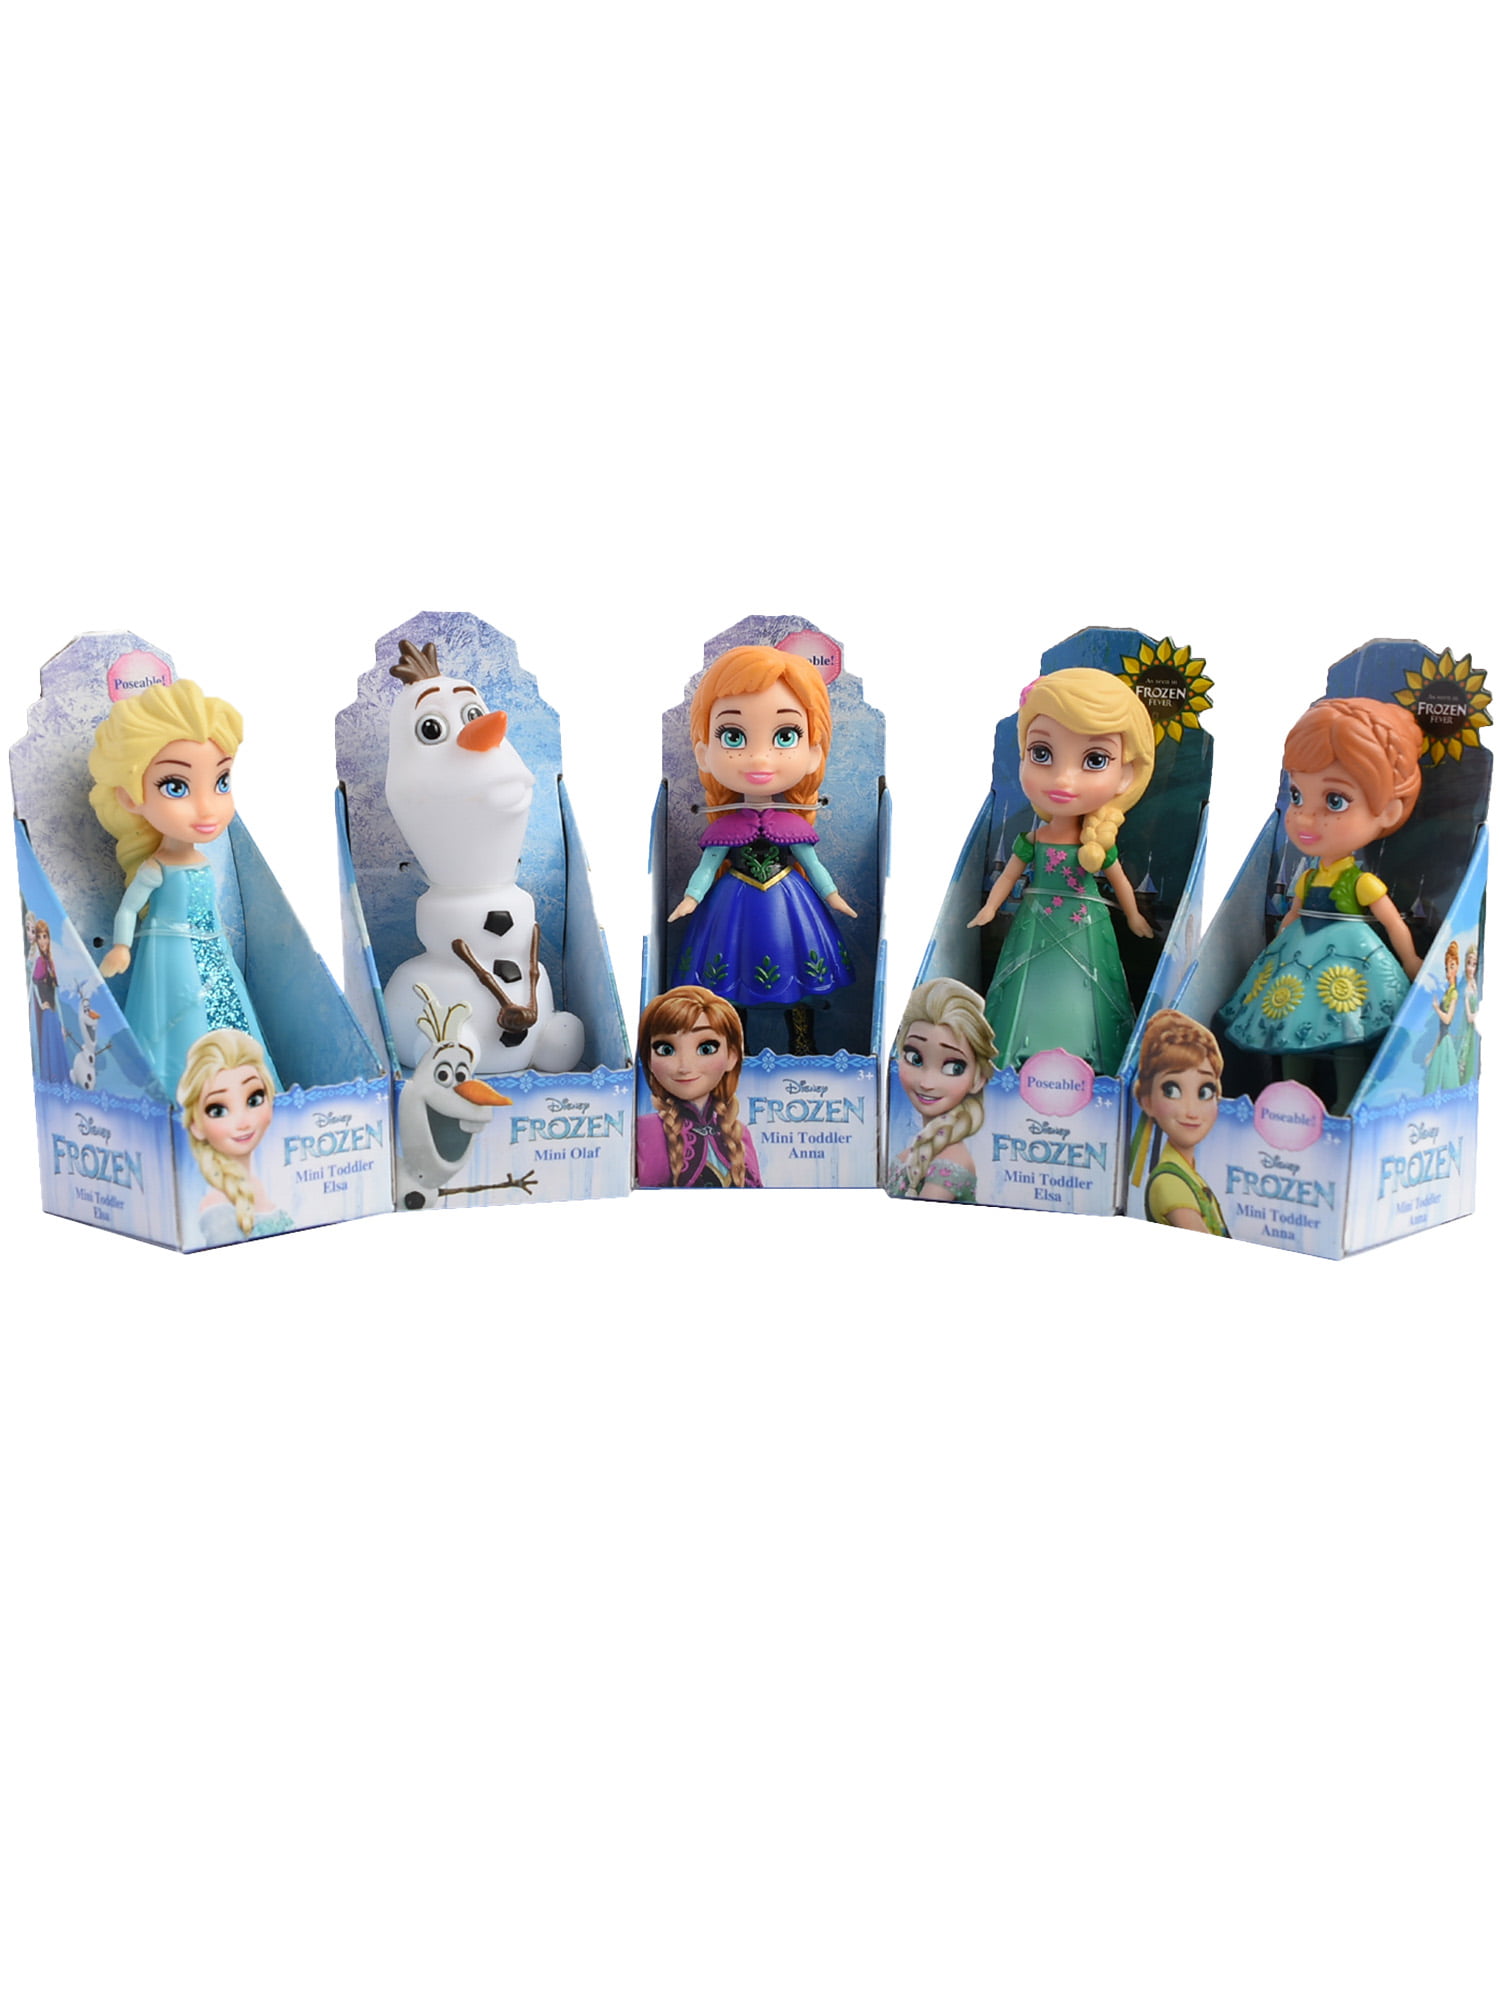 watch frozen dolls